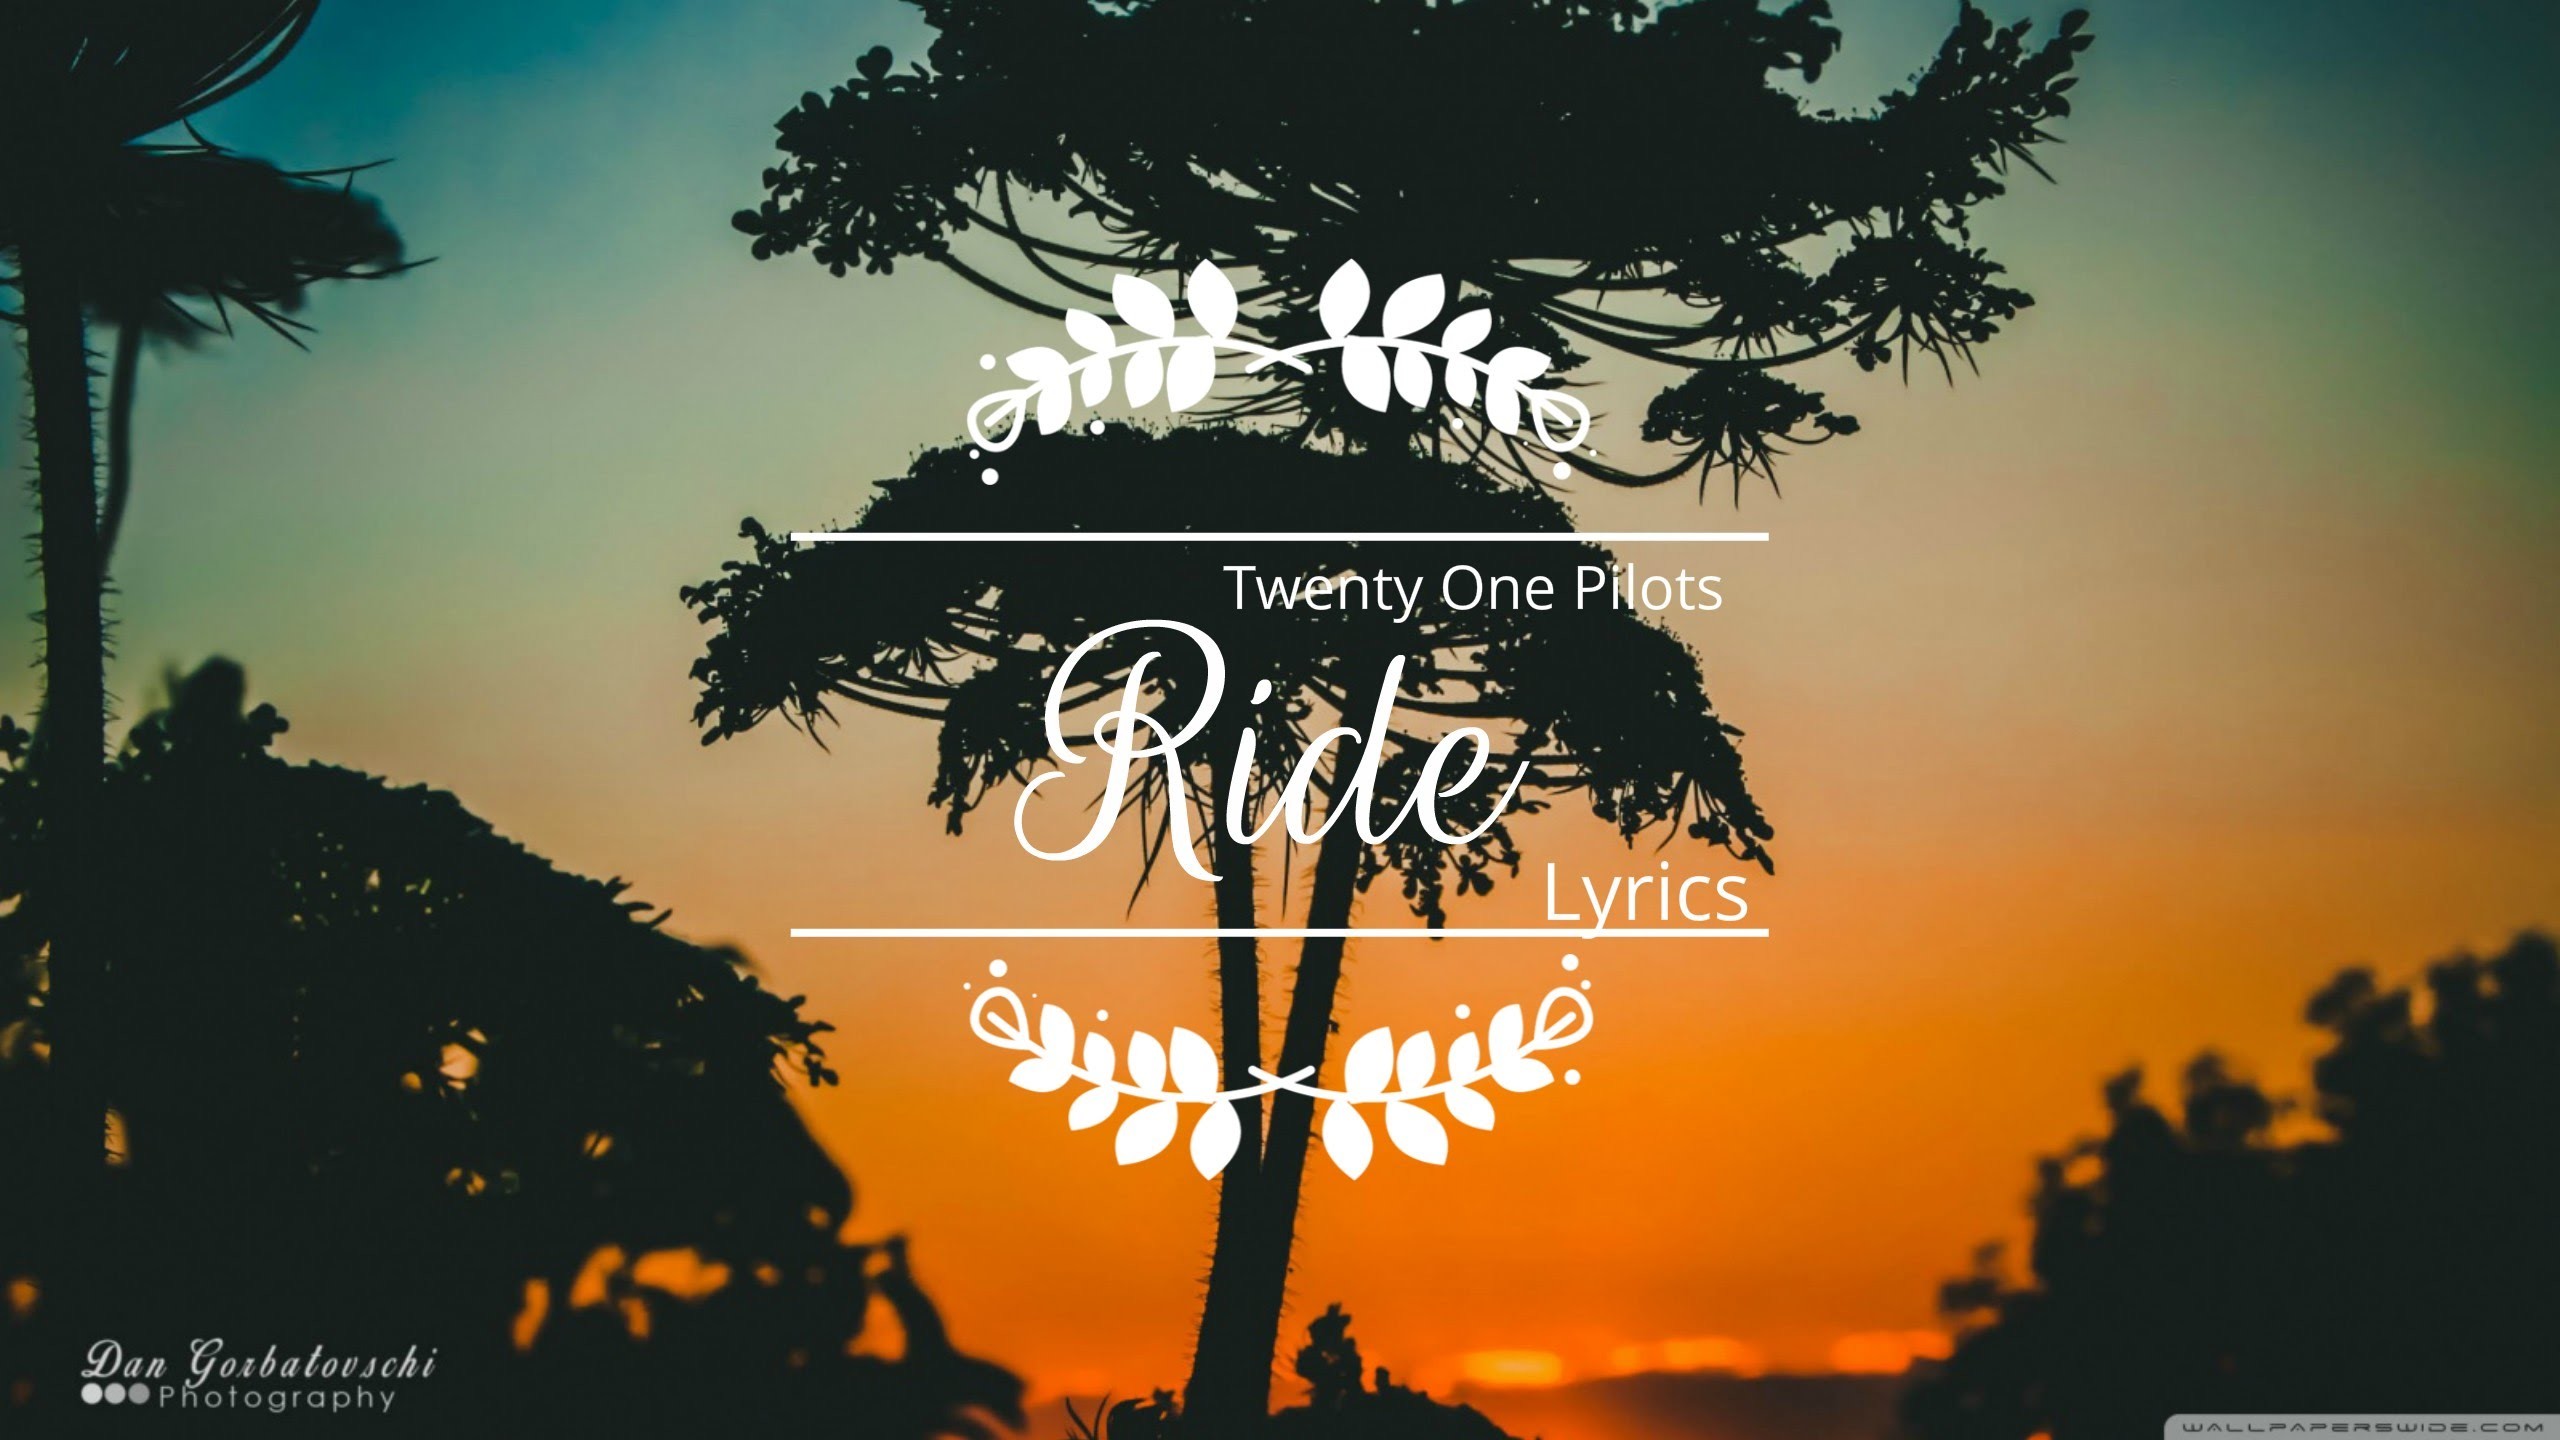 2560x1440 Ride | Twenty One Pilots | Lyrics